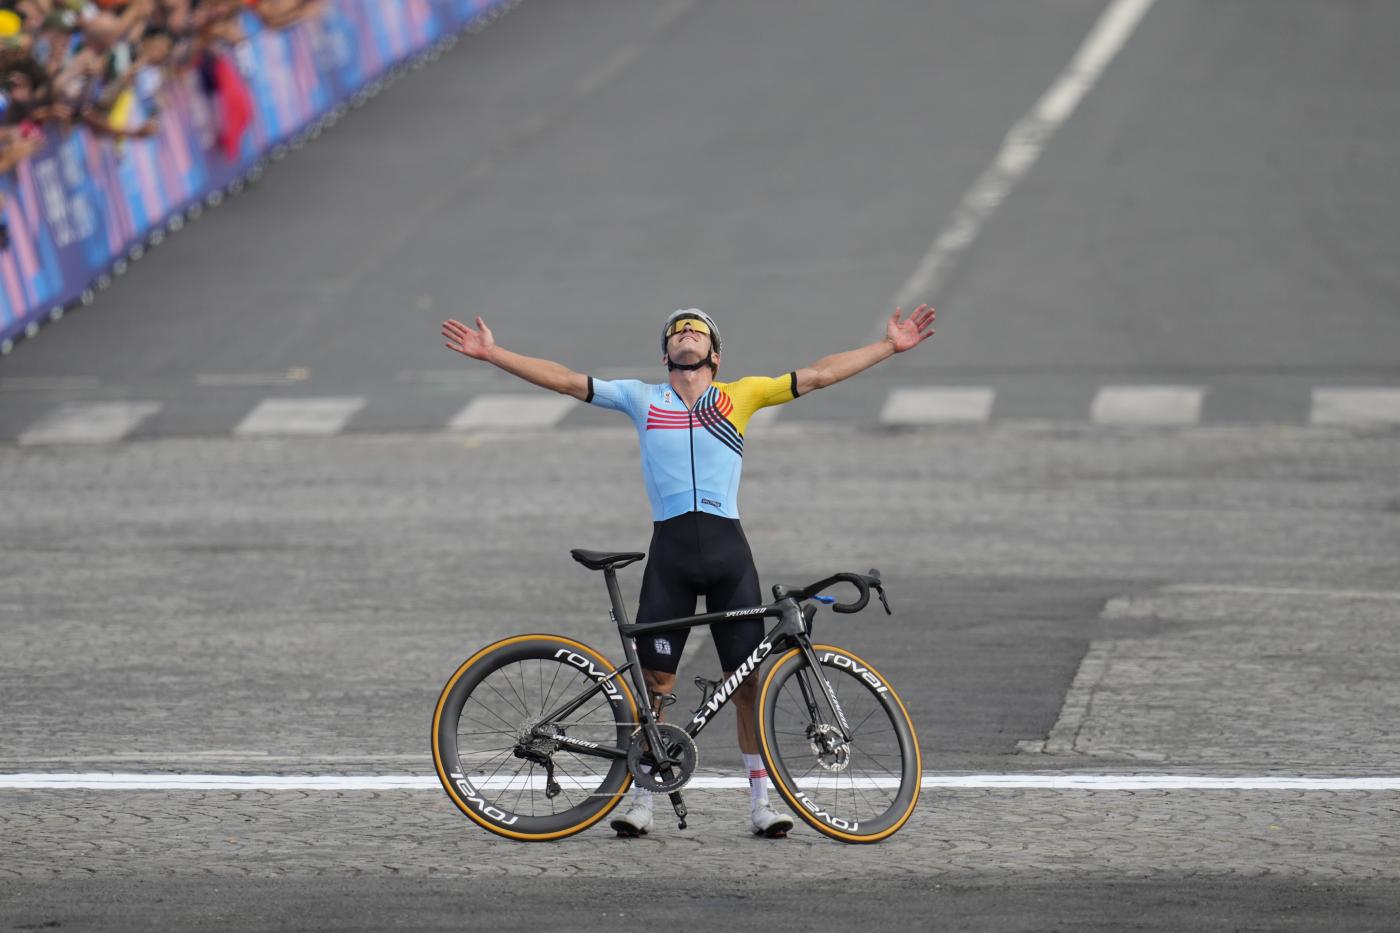 Ciclismo, le pagelle delle Olimpiadi: Evenepoel imprendibile, stecca Van der Poel, l’Italia c’era?